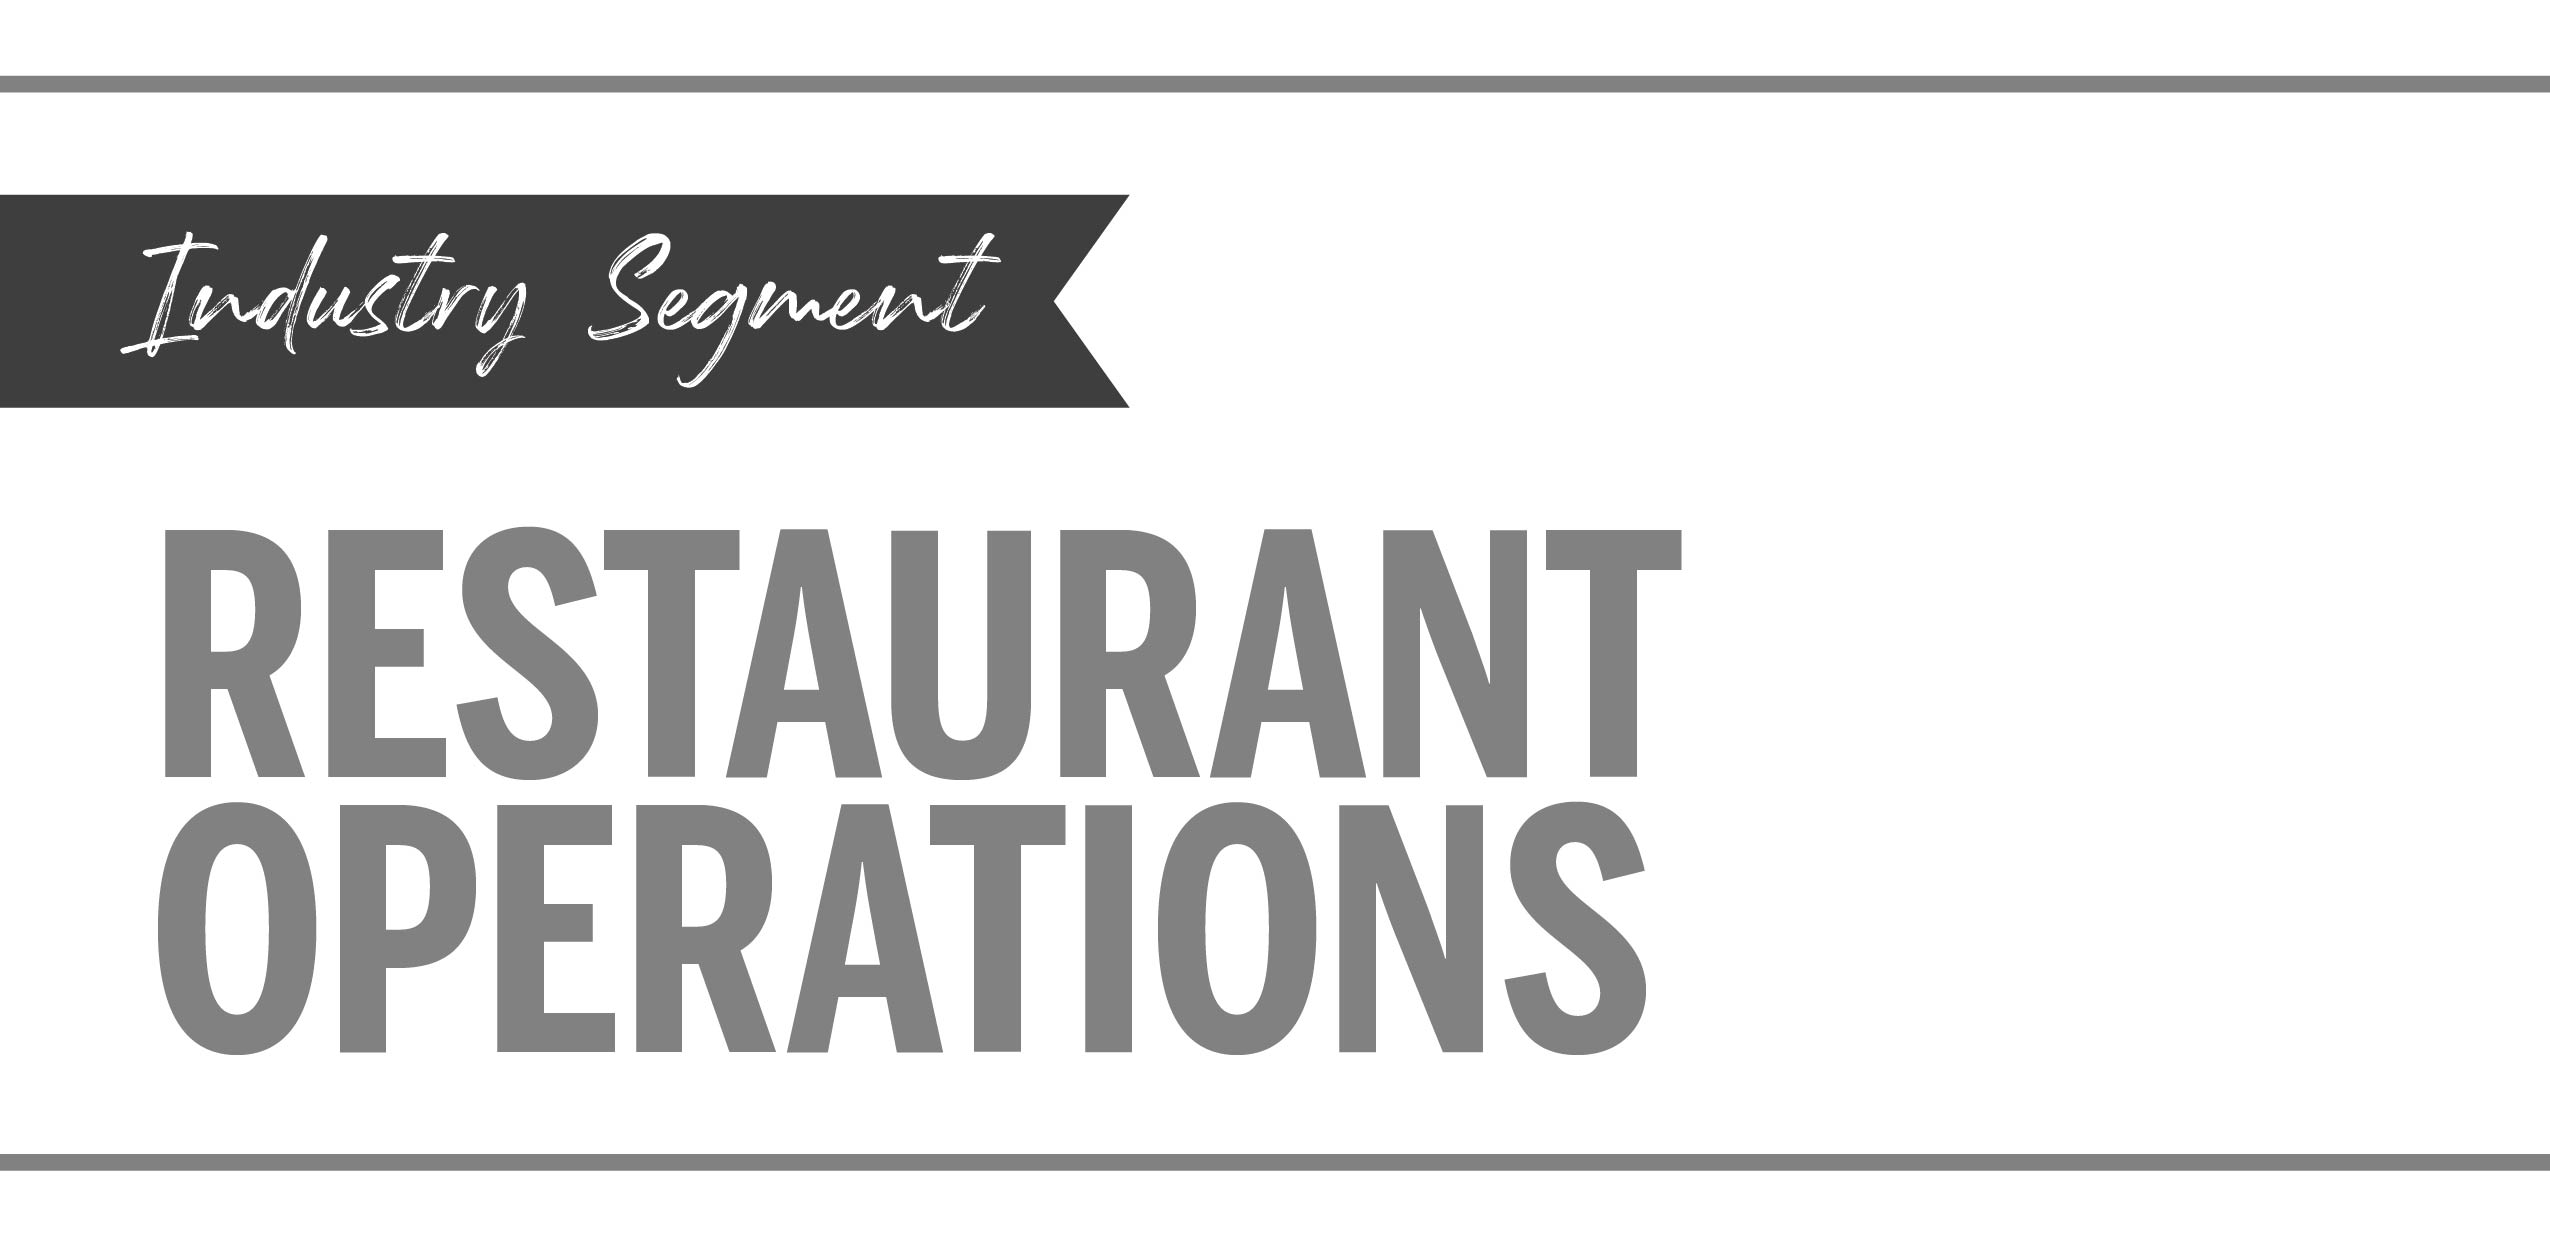 Industry Segment Restaurant Operations.jpg